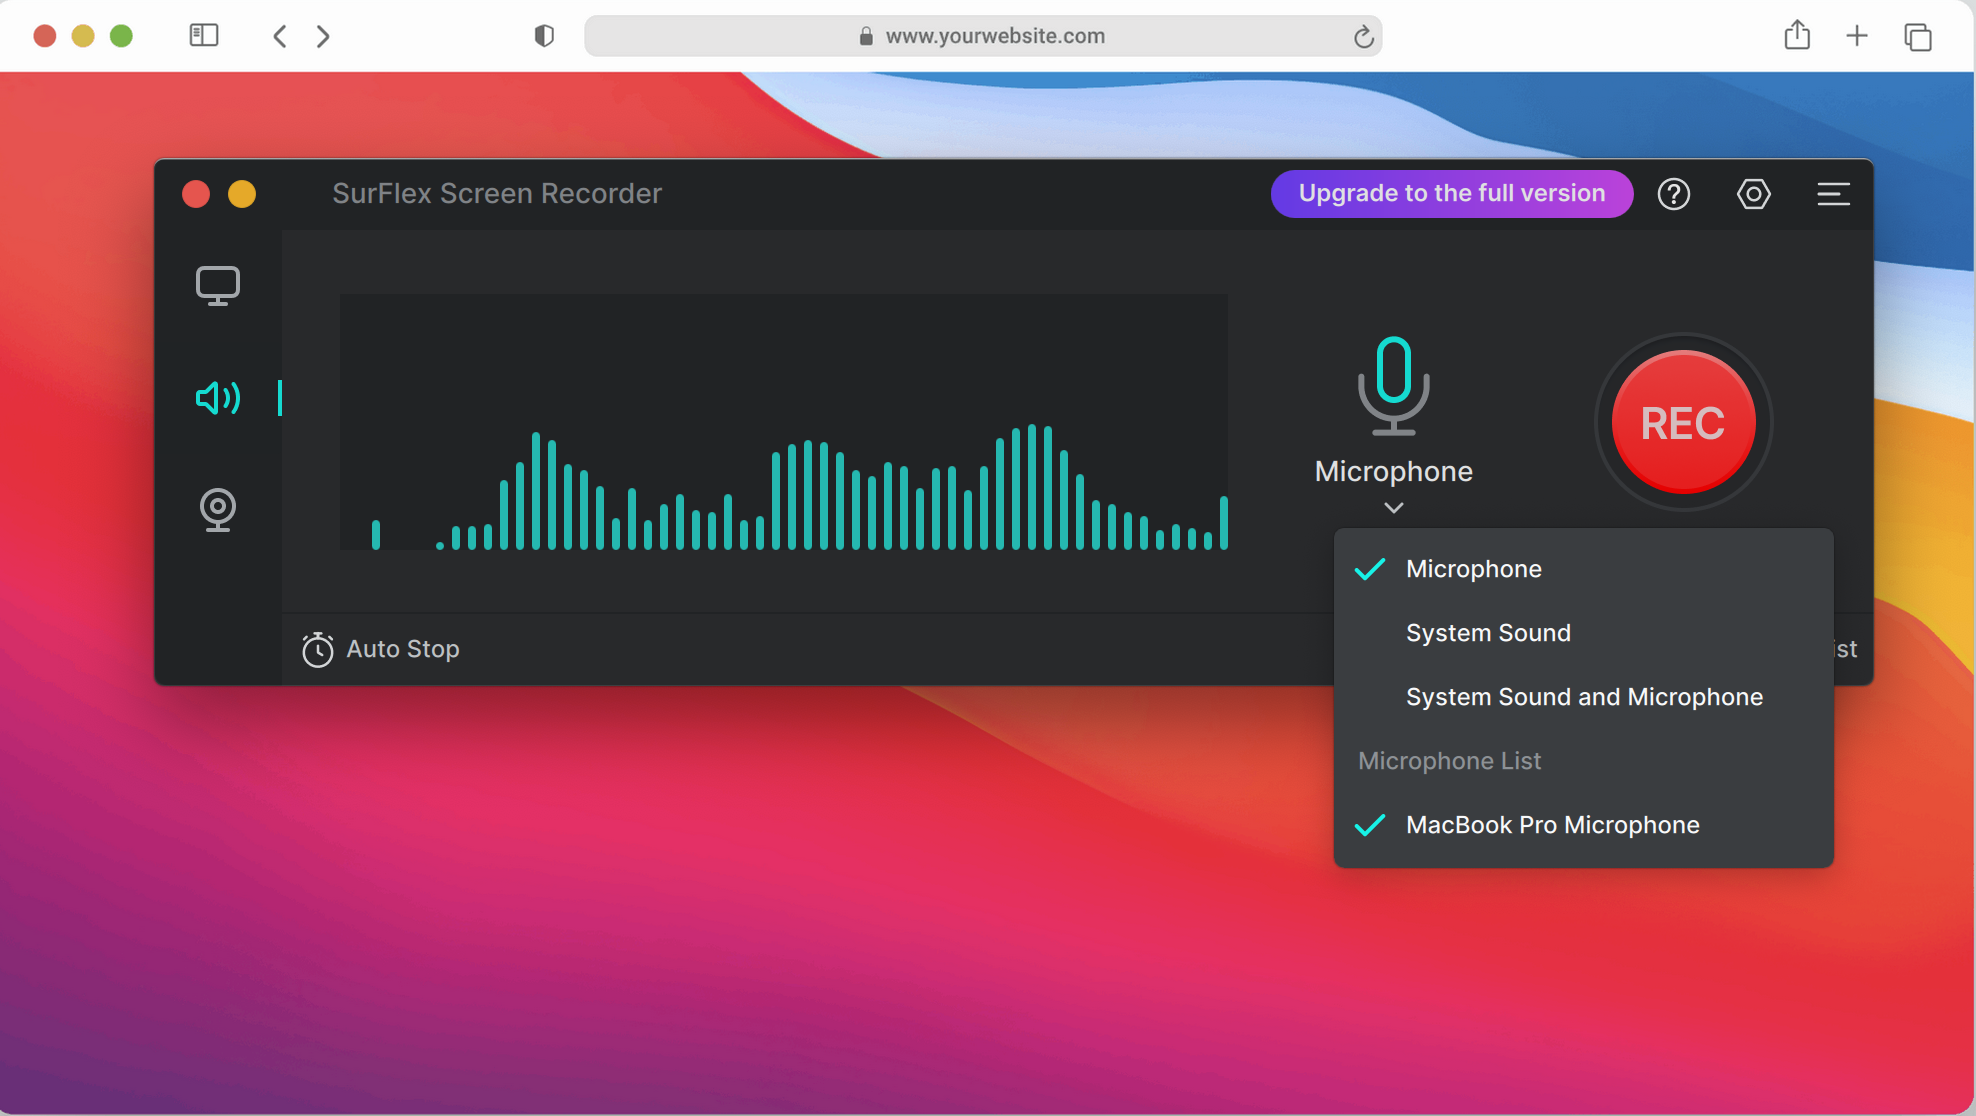 SurFlex Screen Recorder audio source